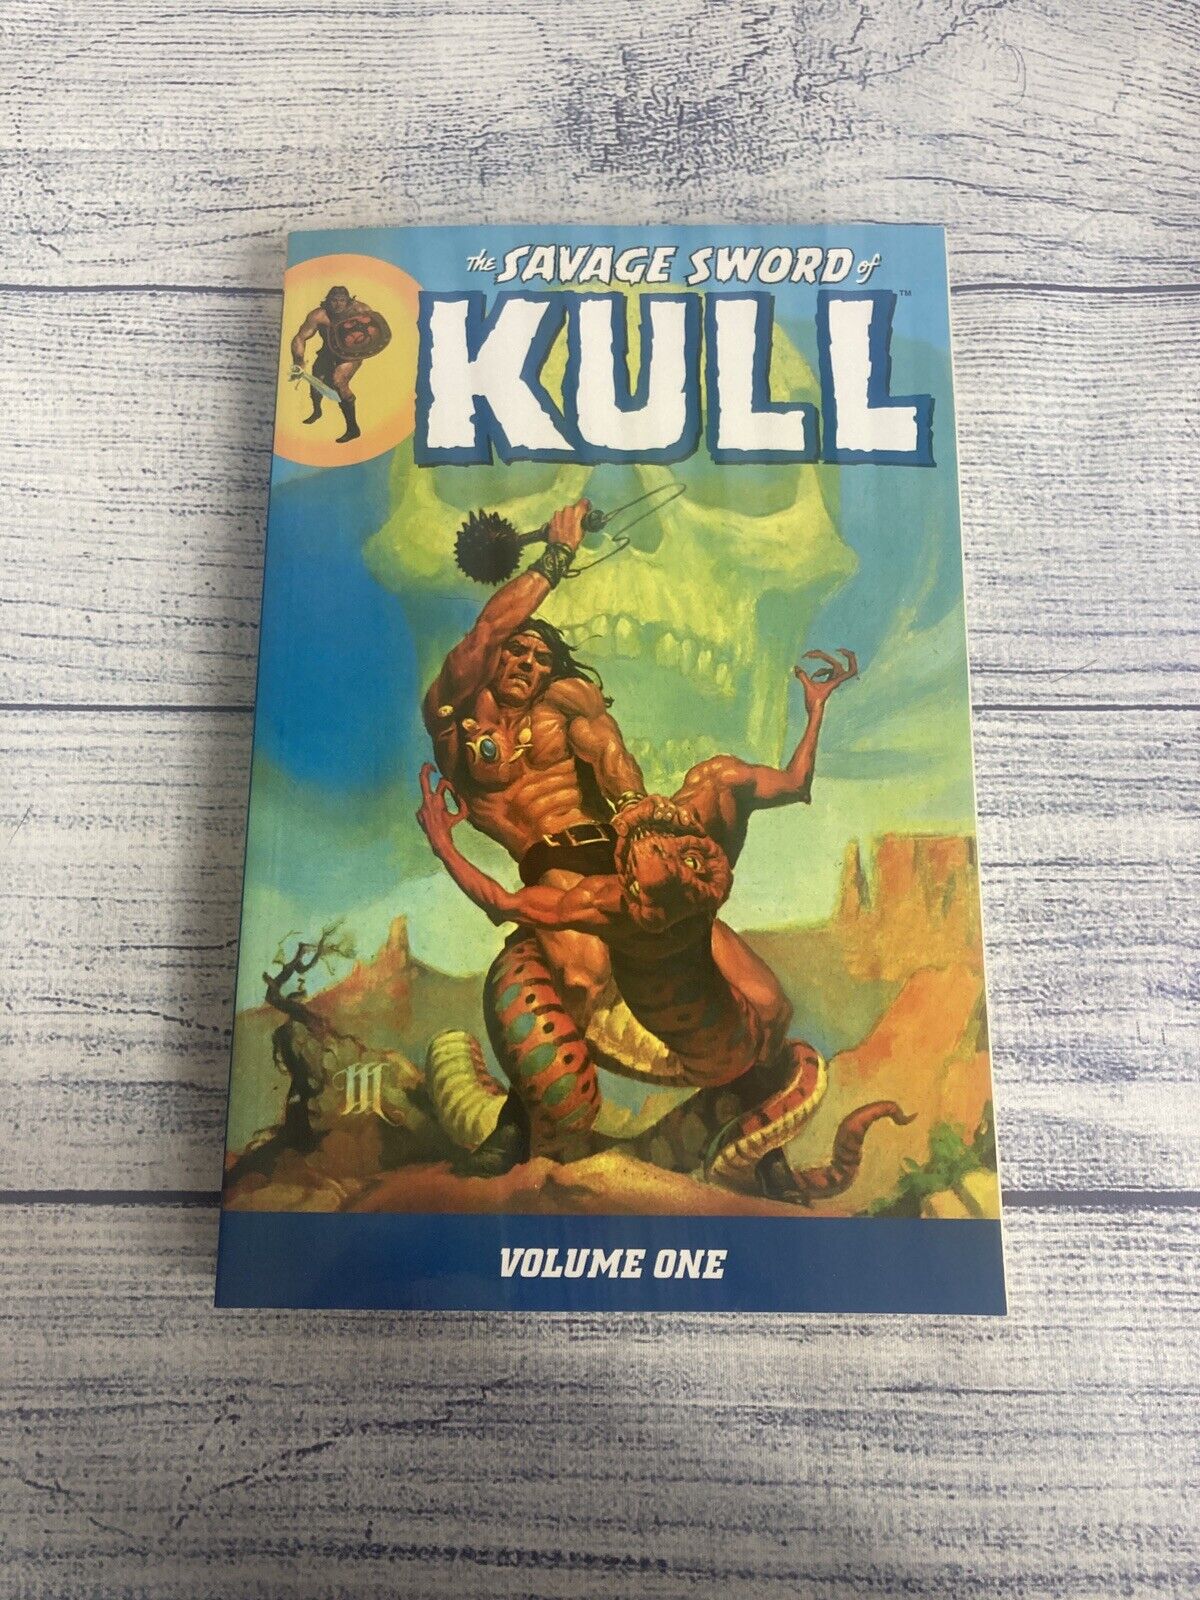 The Savage Sword of Kull #1 (Dark Horse Comics, November 2010) Graphic Novel